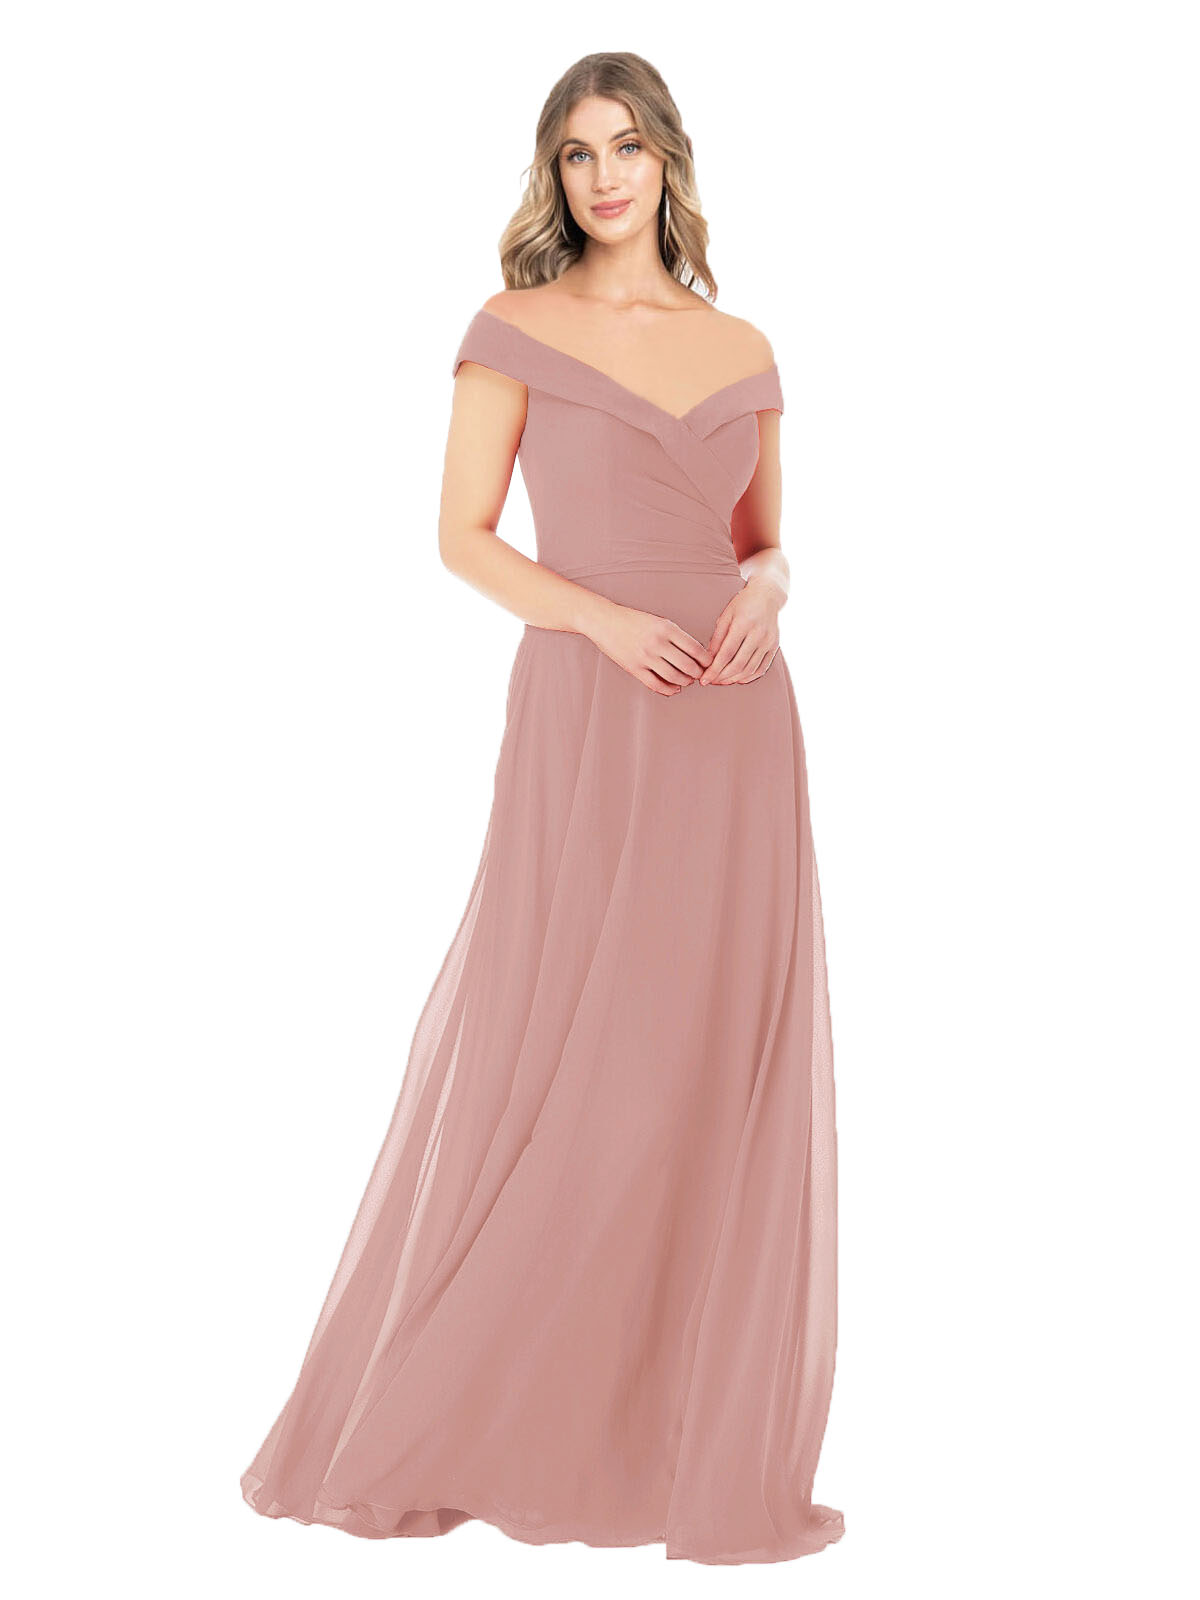 Dusty Pink A-Line Off the Shoulder Sleeveless Long Bridesmaid Dress Alva